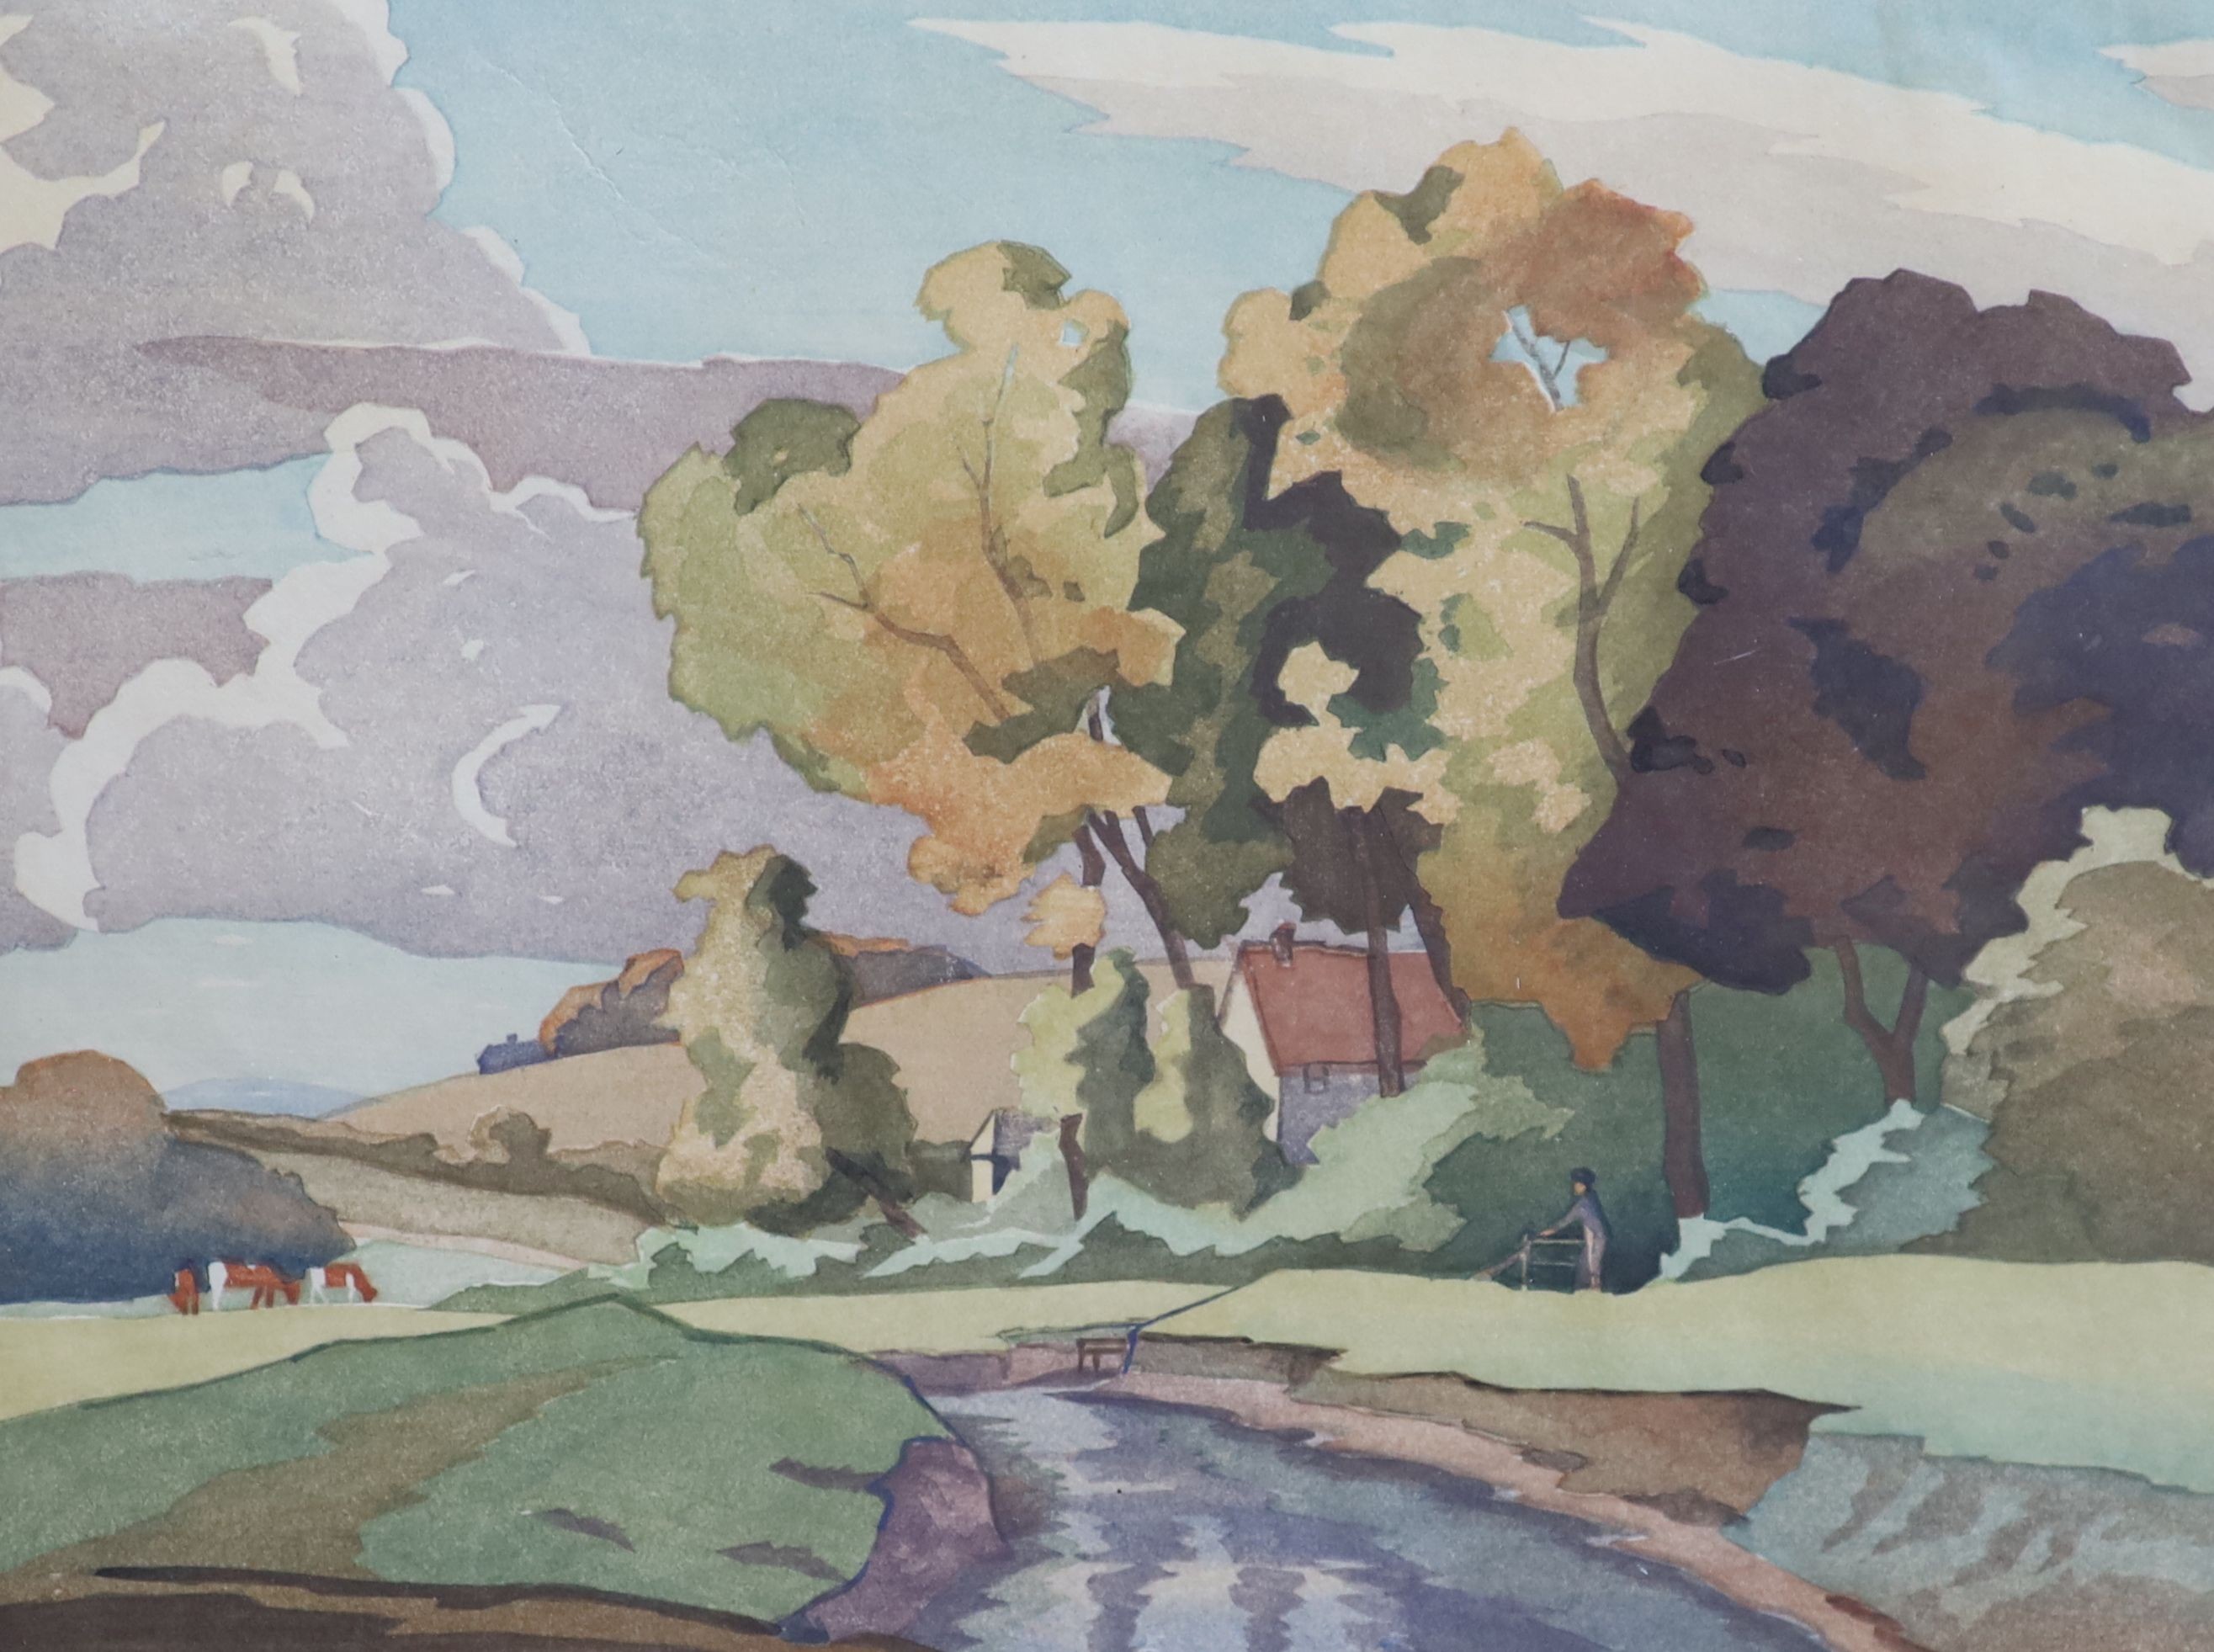 Eric Slater (1896-1963), An Autumn Morning, woodblock print, 24 x 31cm.